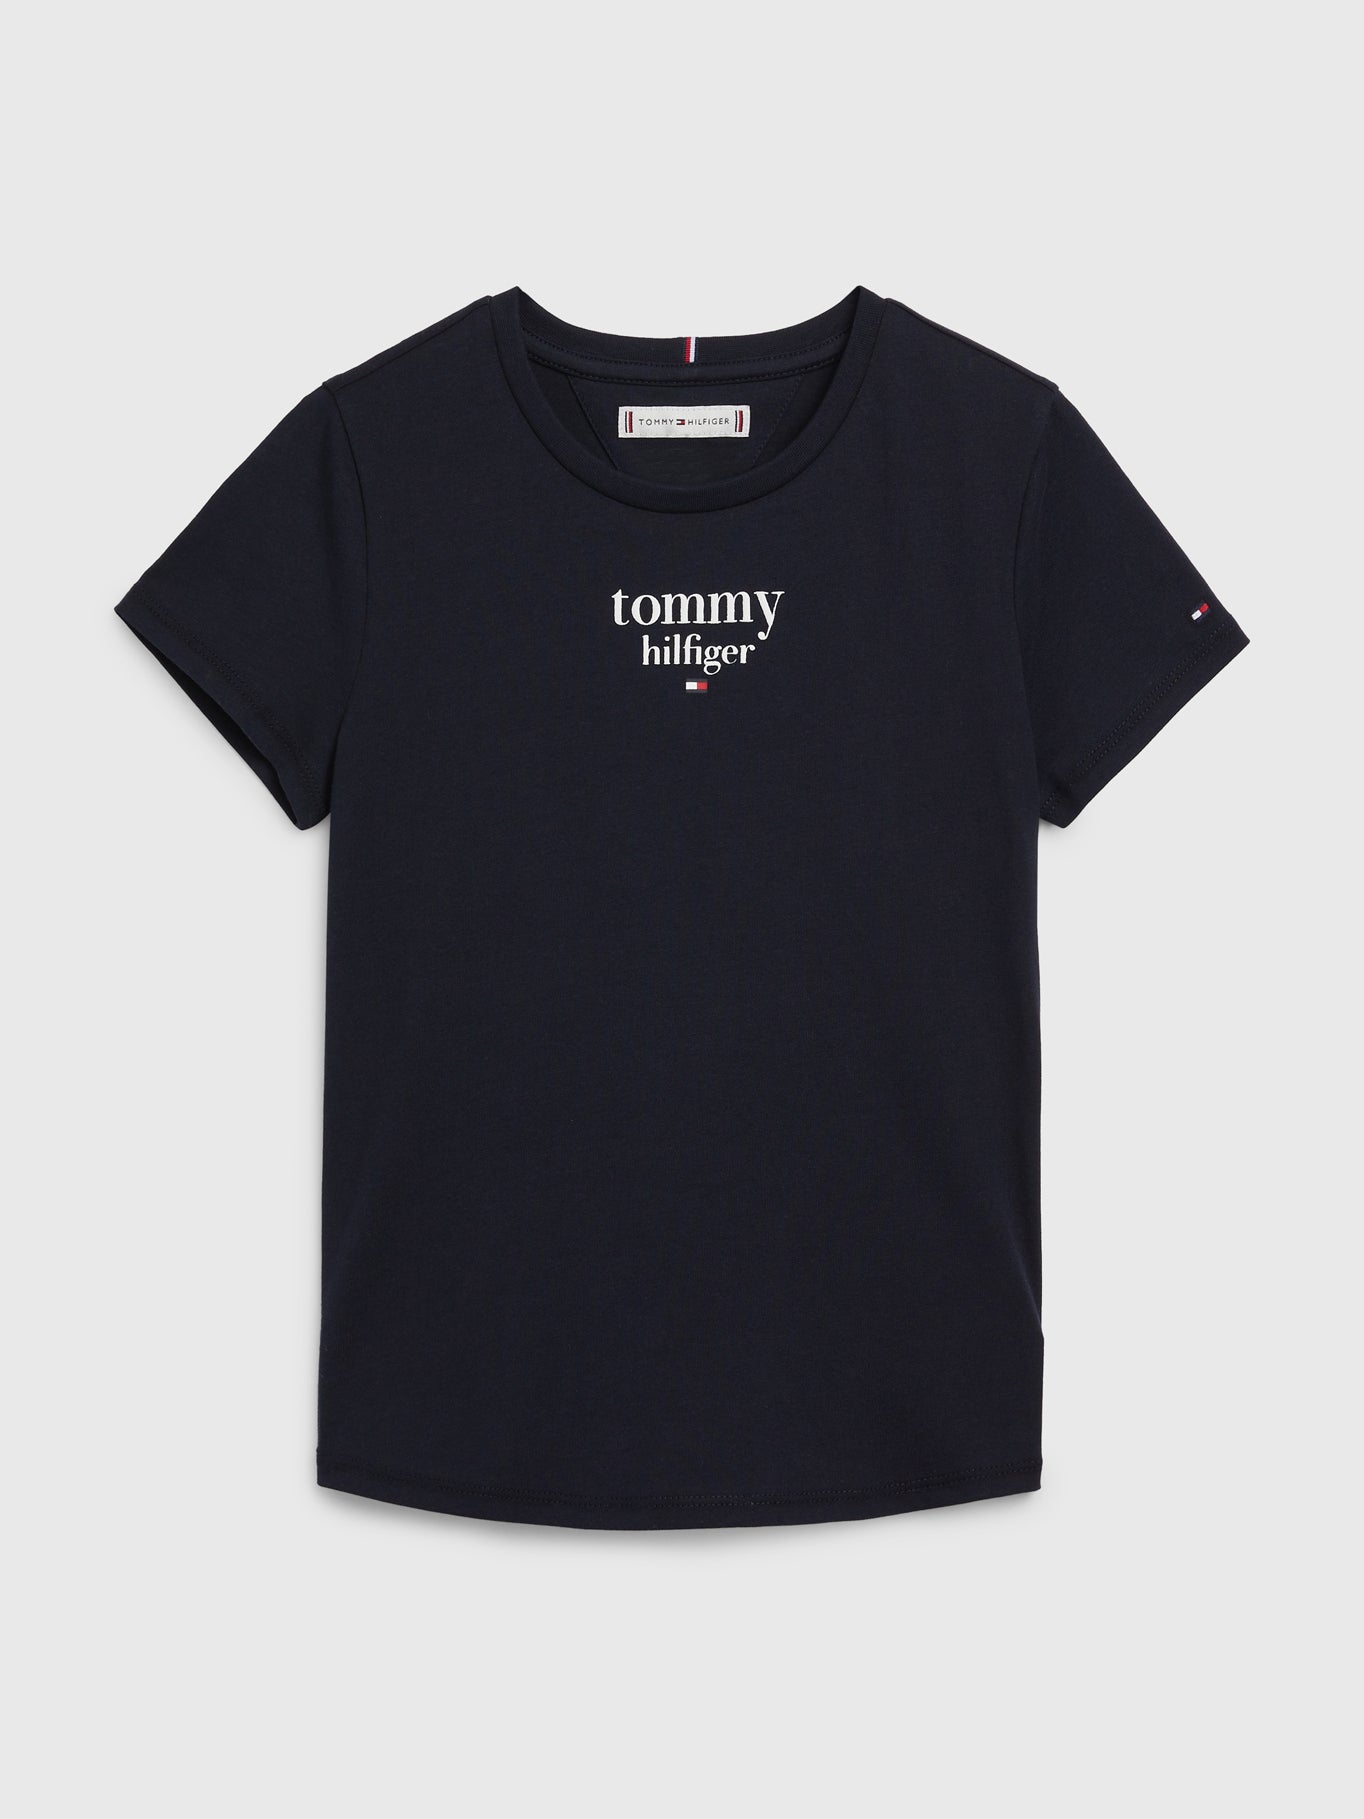 NINAS-camiseta-tommy-hilfiger-manga-corta-liso-p-ninas-10